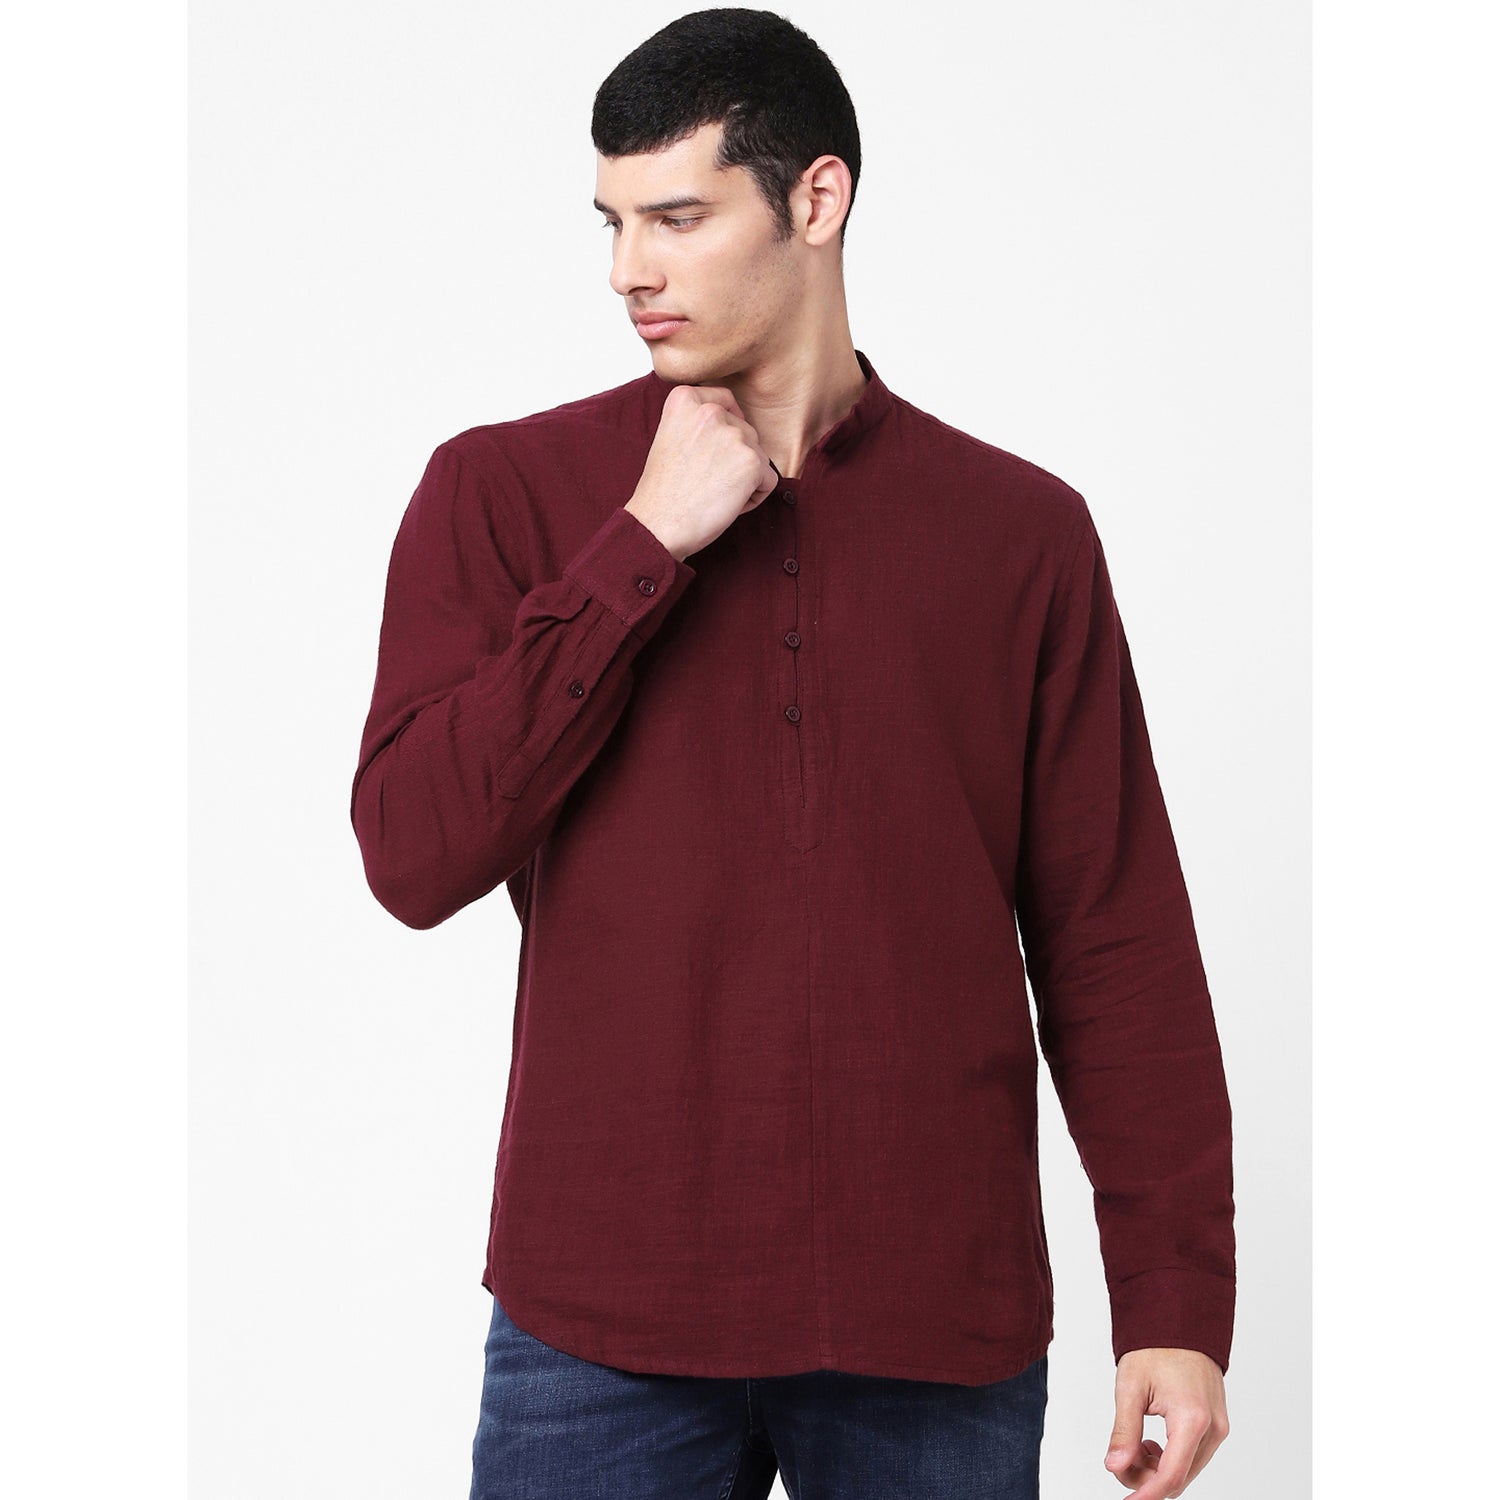 Burgundy Solid Regular Fit Cotton Casual Shirt (BAMAOU2)